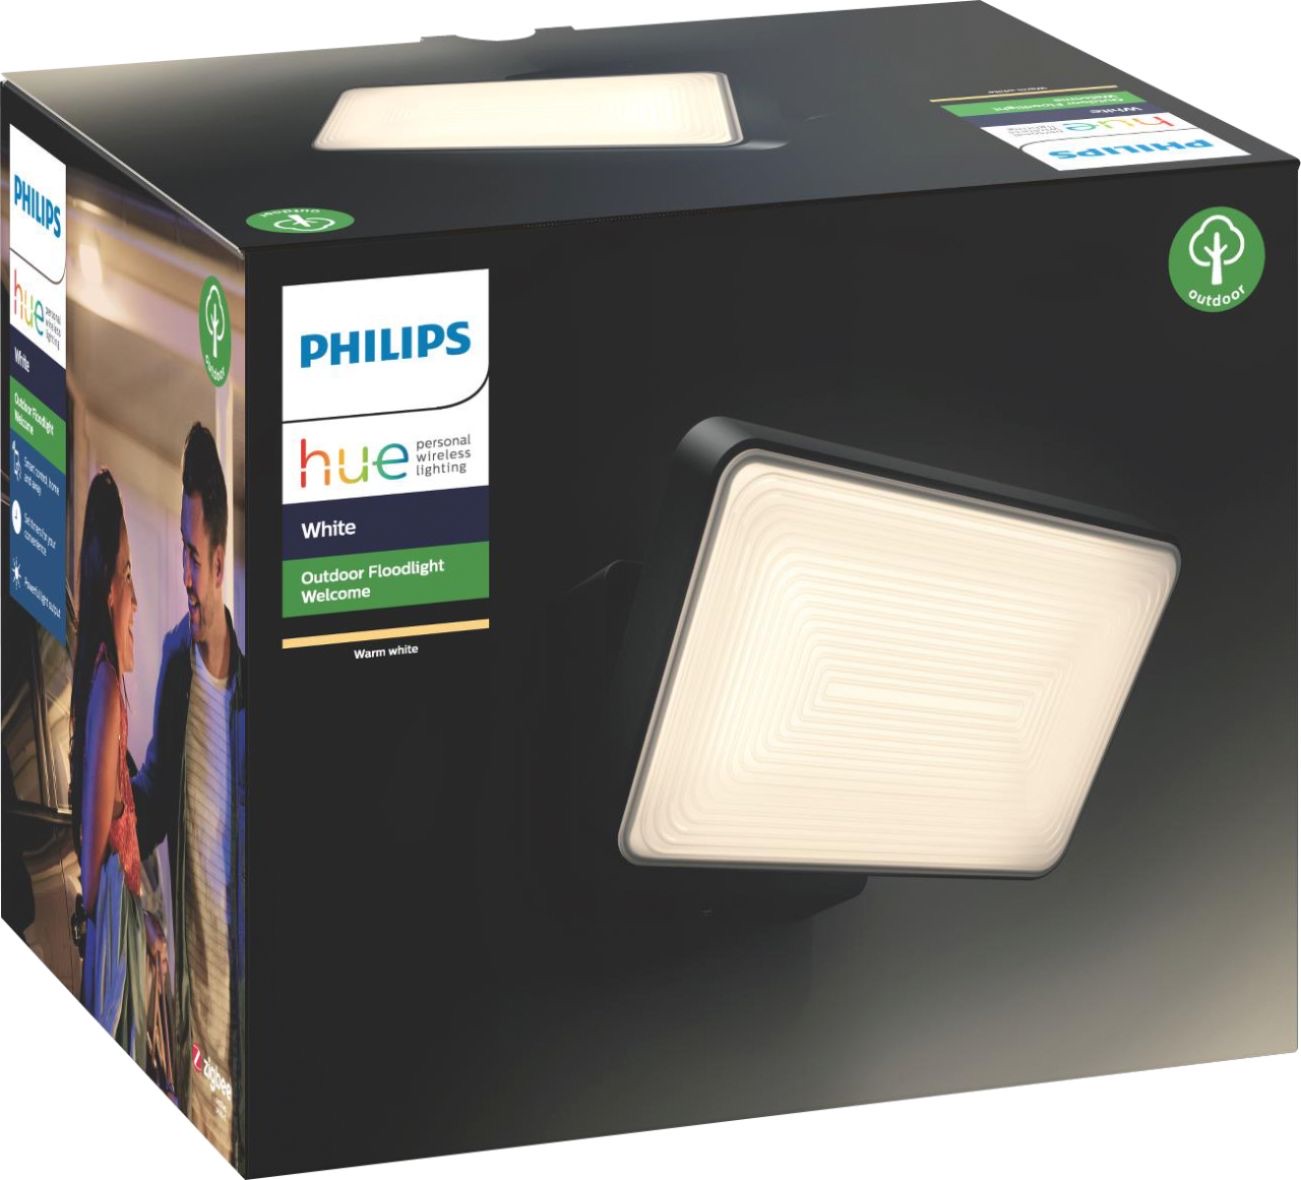 Philips Hue White Welcome Outdoor Floodlight Black 1743630V7 - Best Buy